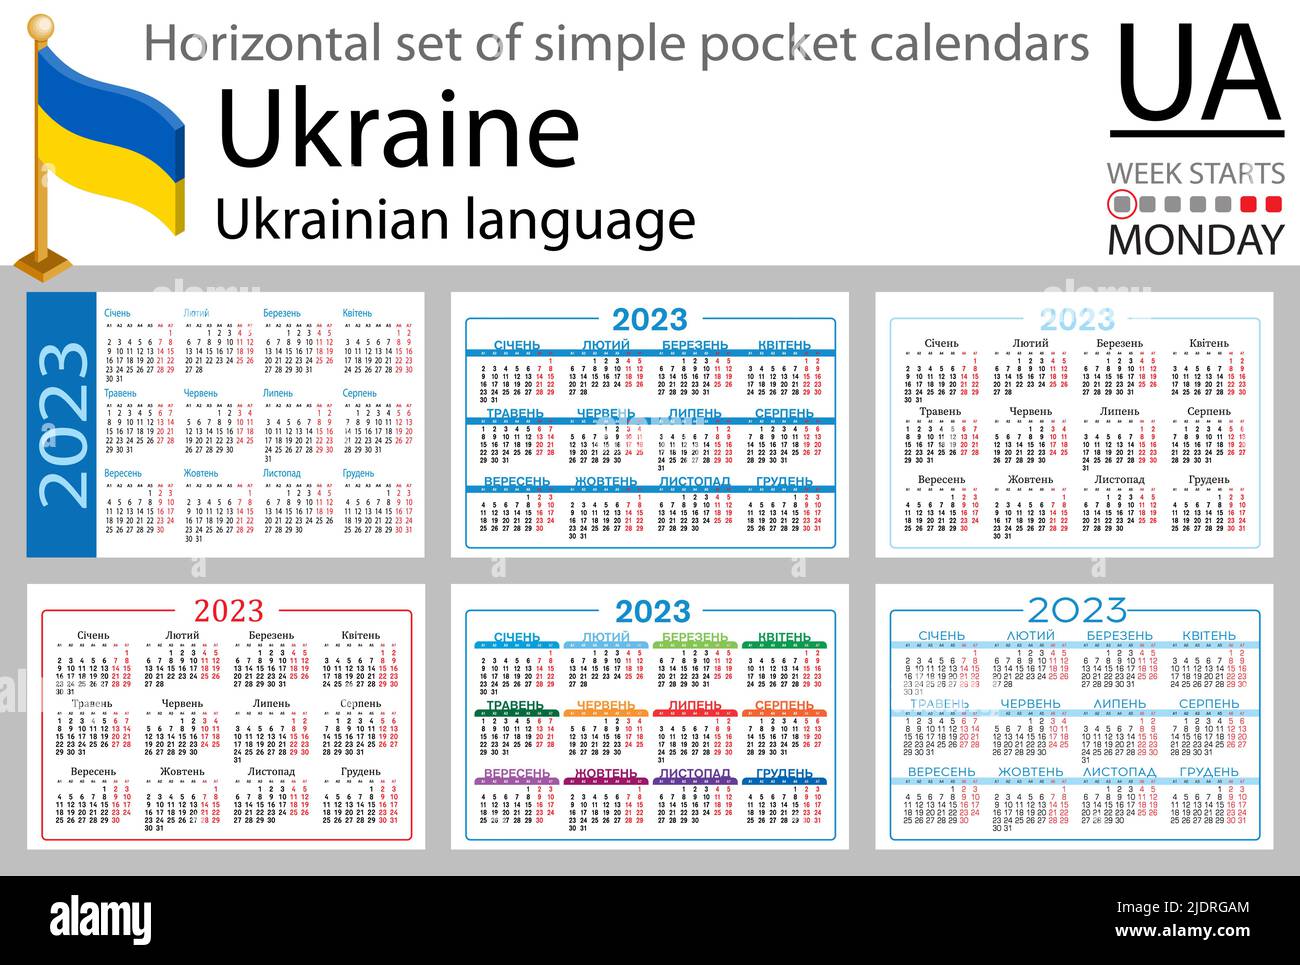 Ukrainian horizontal pocket calendar for 2023 (two thousand twenty